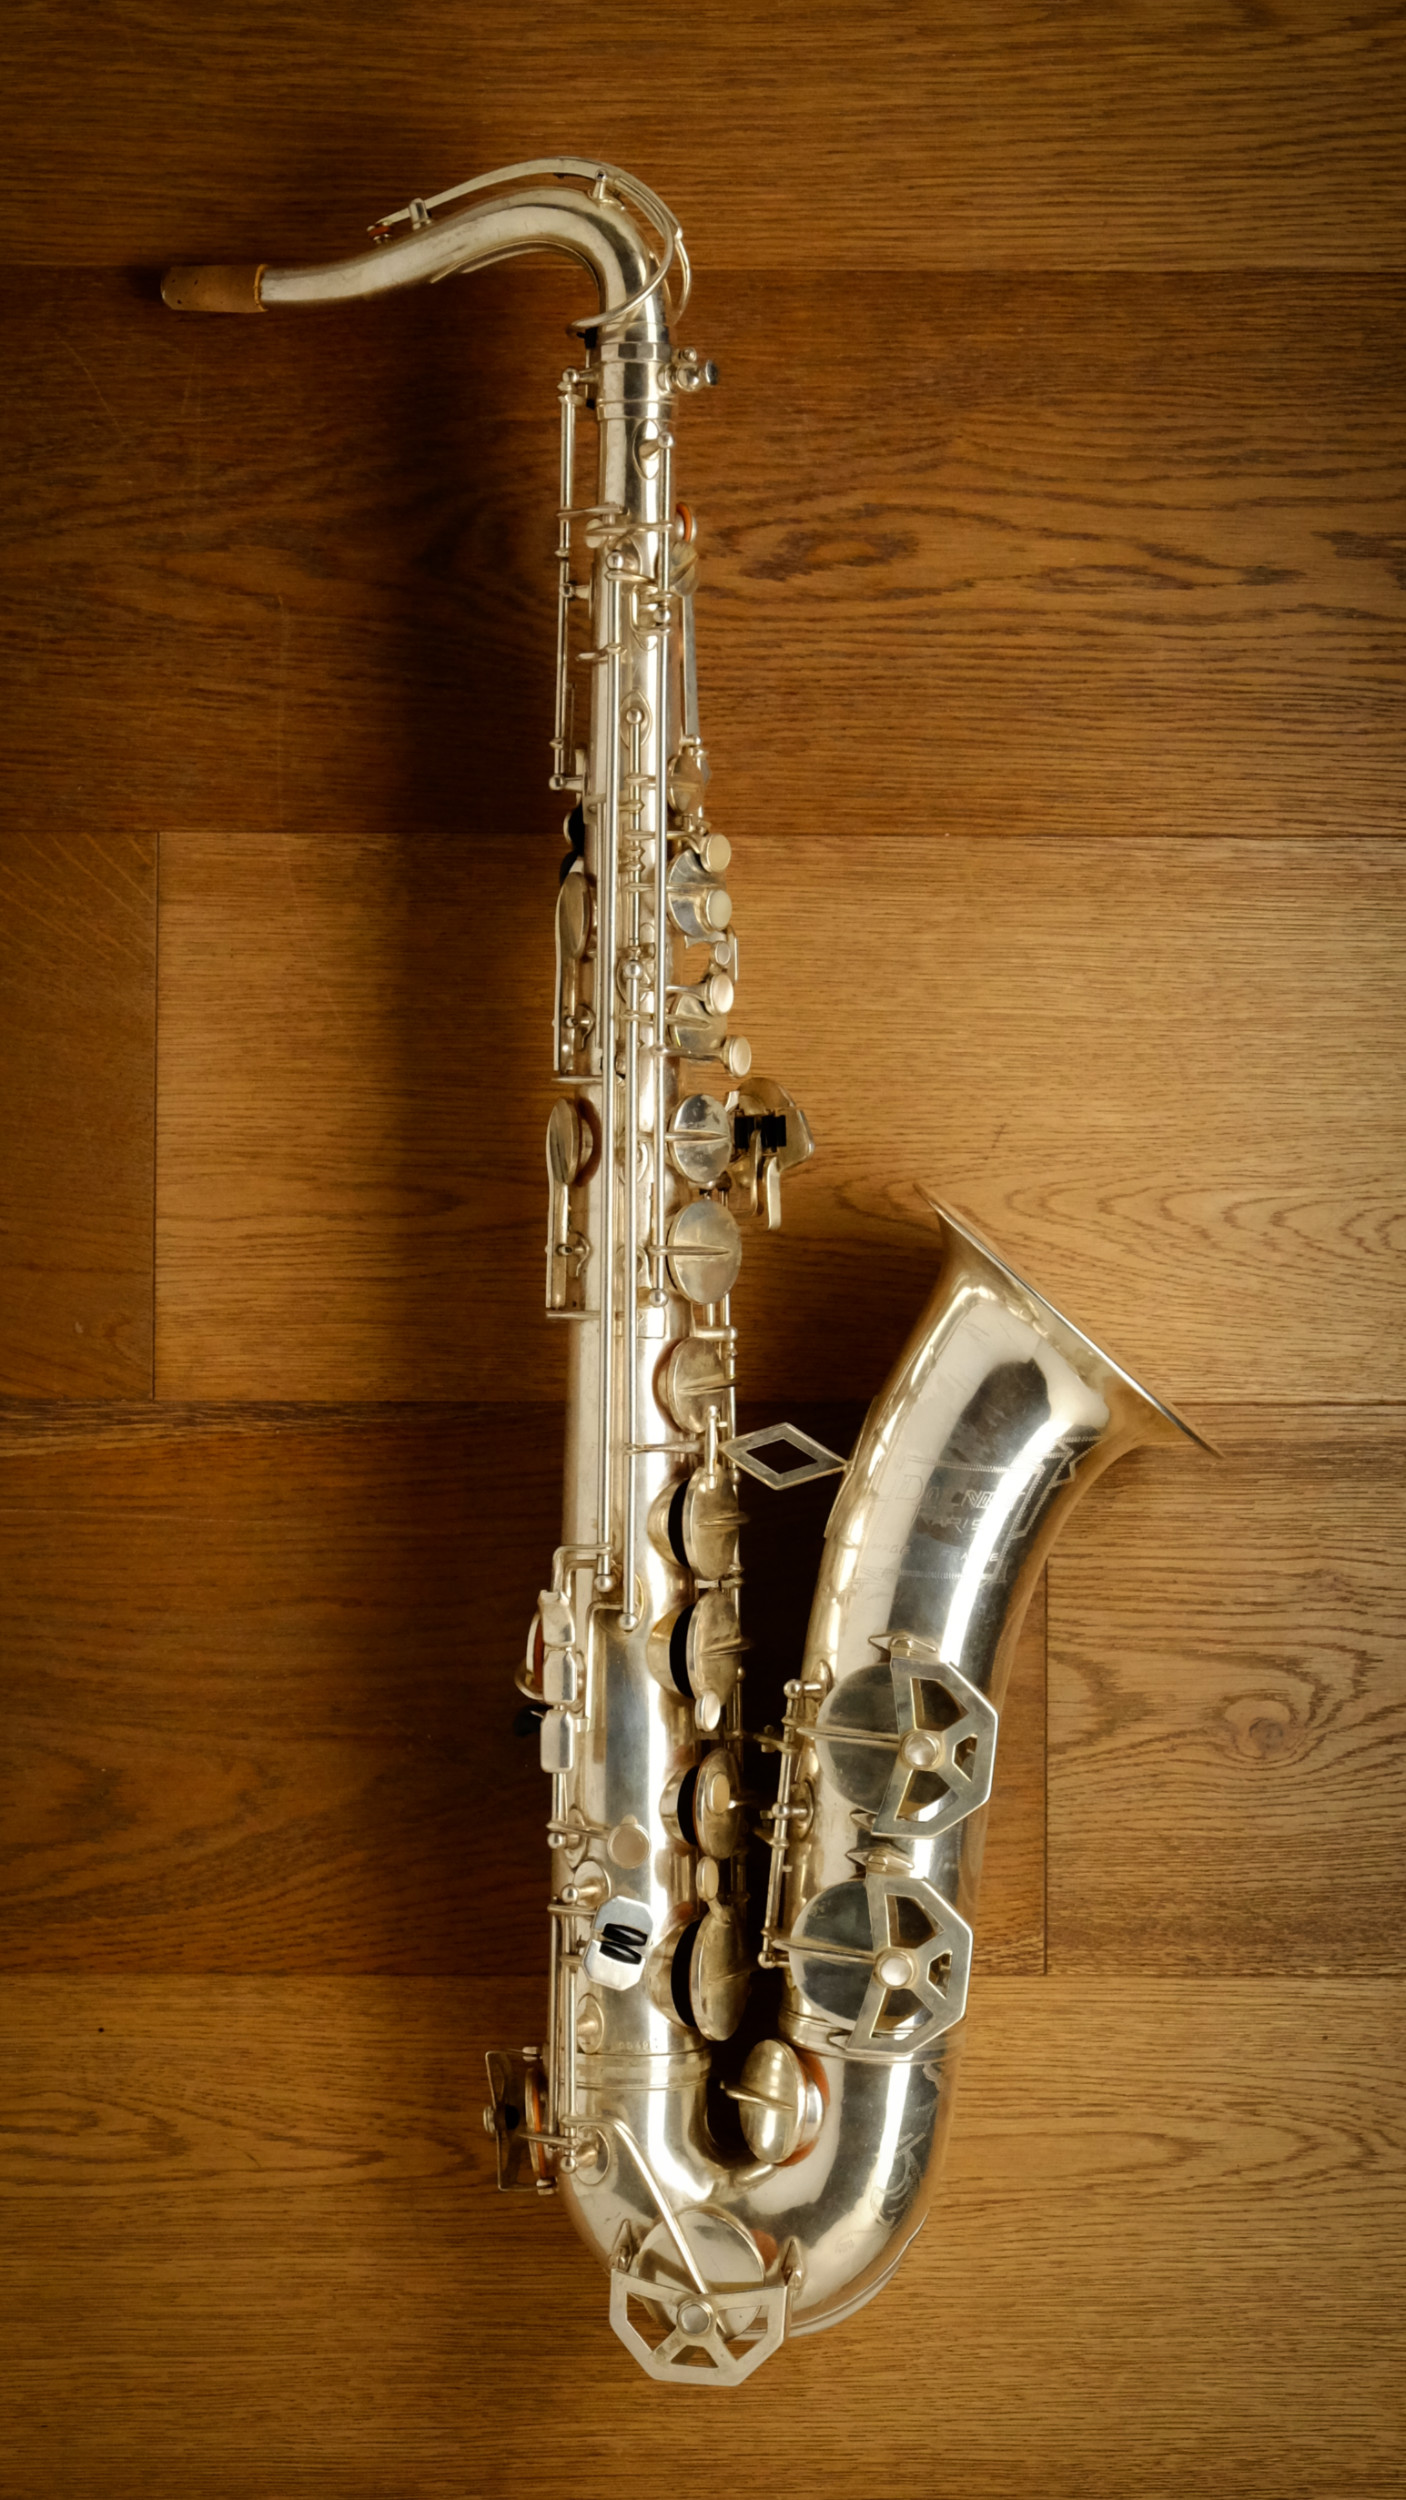 (Used) Dolnet Bel-Air Tenor Saxophone circa.1950